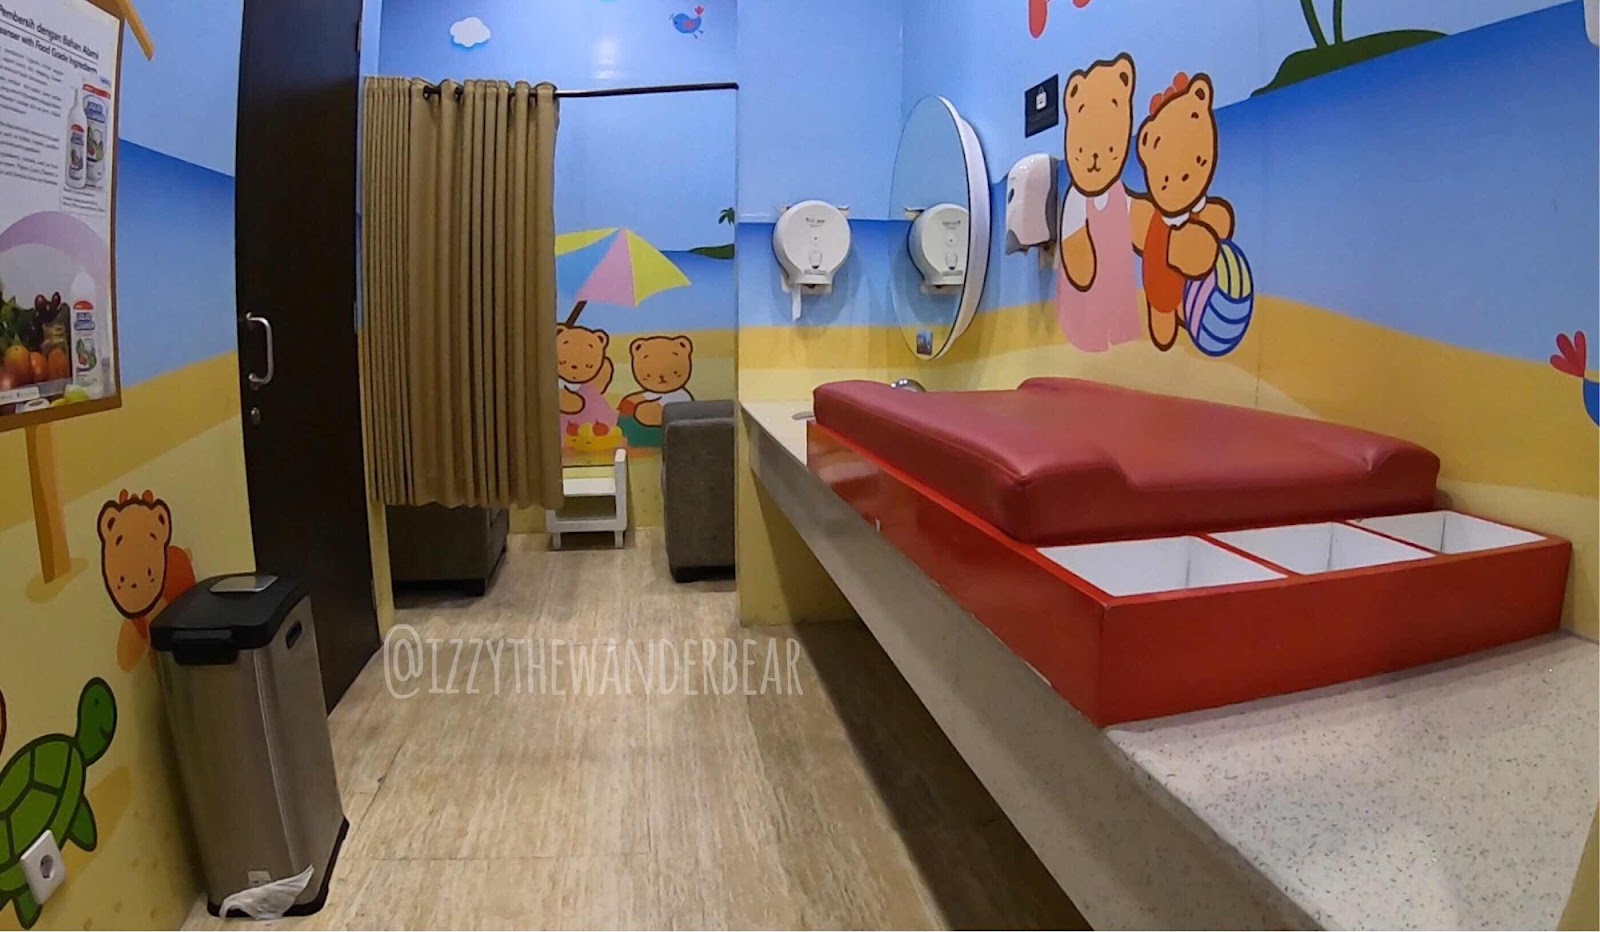 Izzy the Wander Bear - Nursing Room, Lippo Mall Kemang